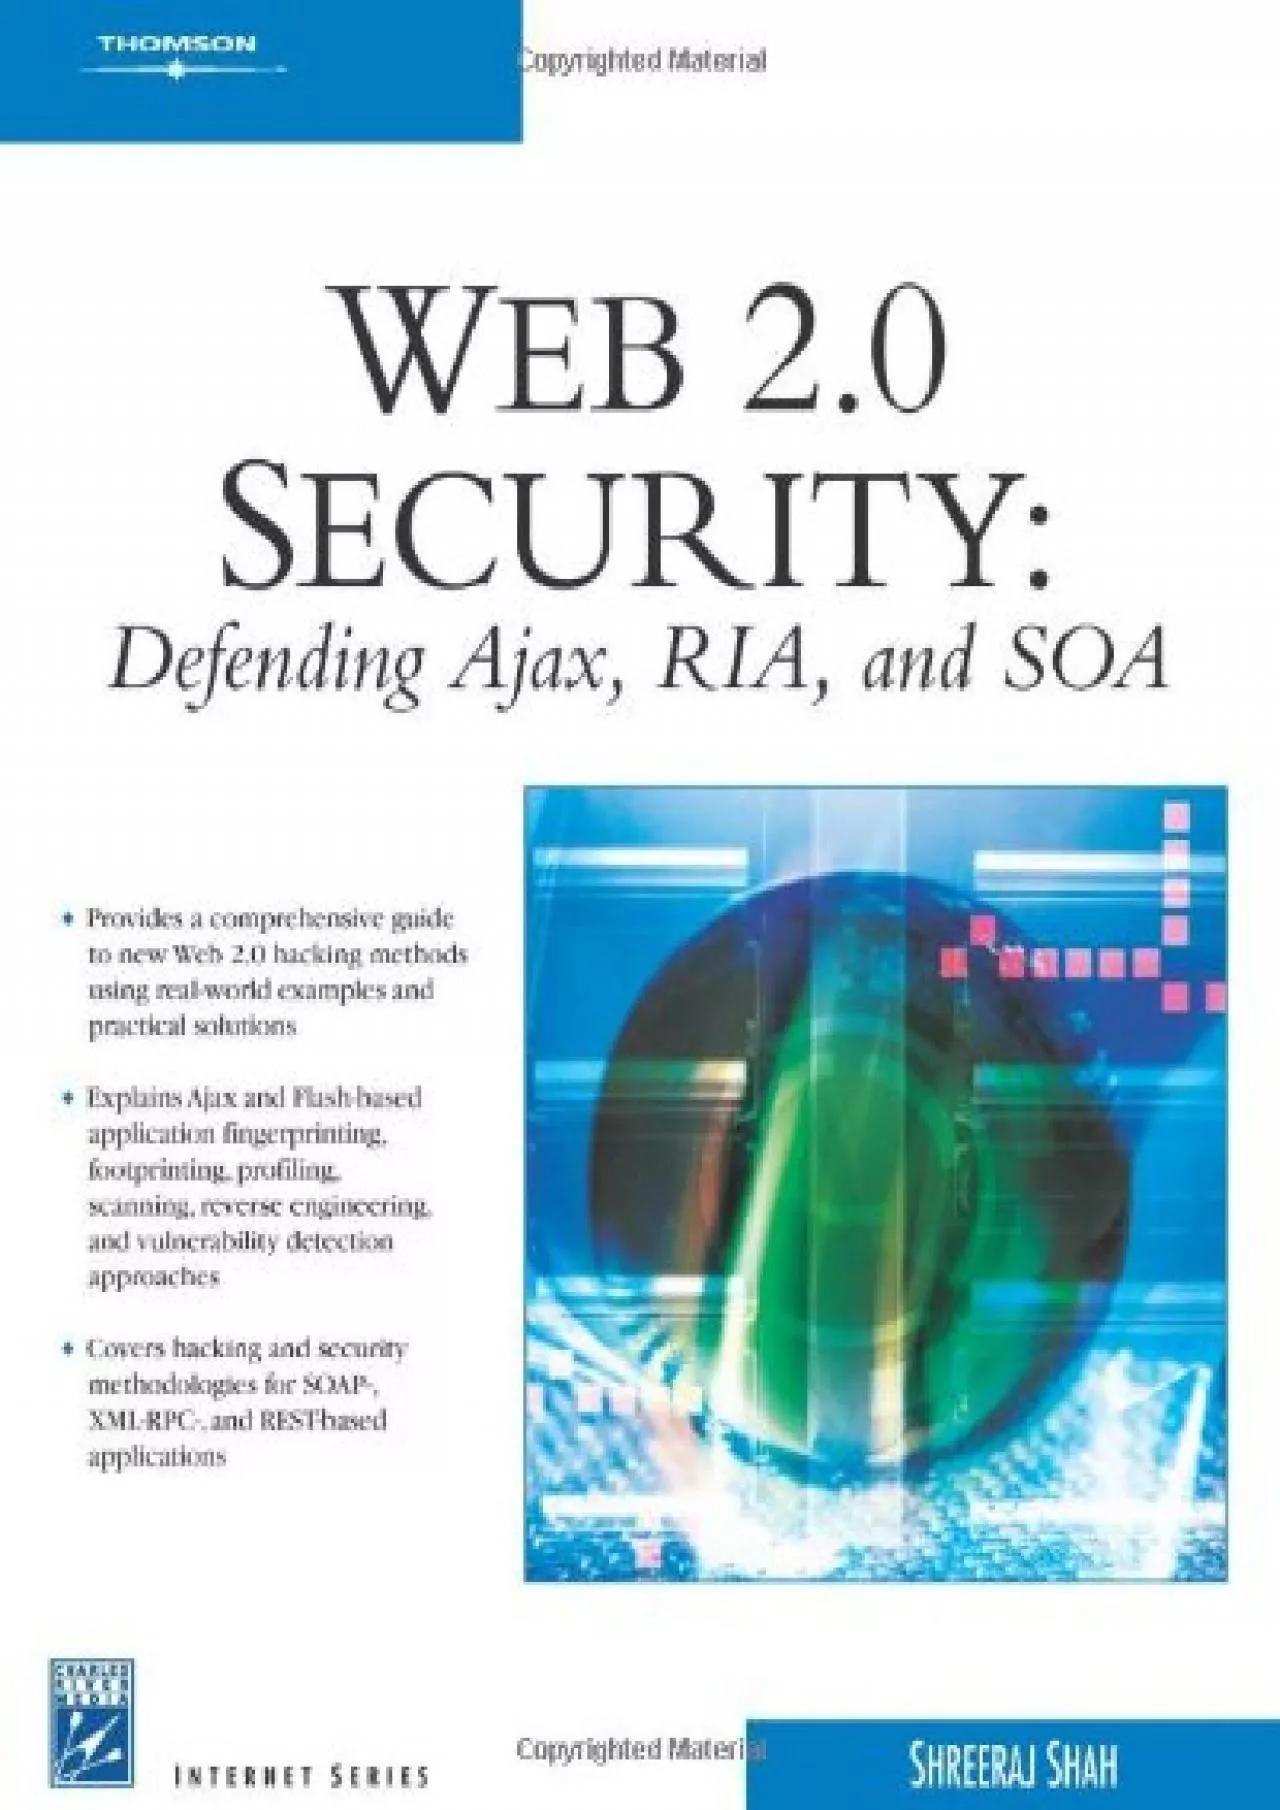 [PDF]-Web 2.0 Security - Defending AJAX, RIA, AND SOA